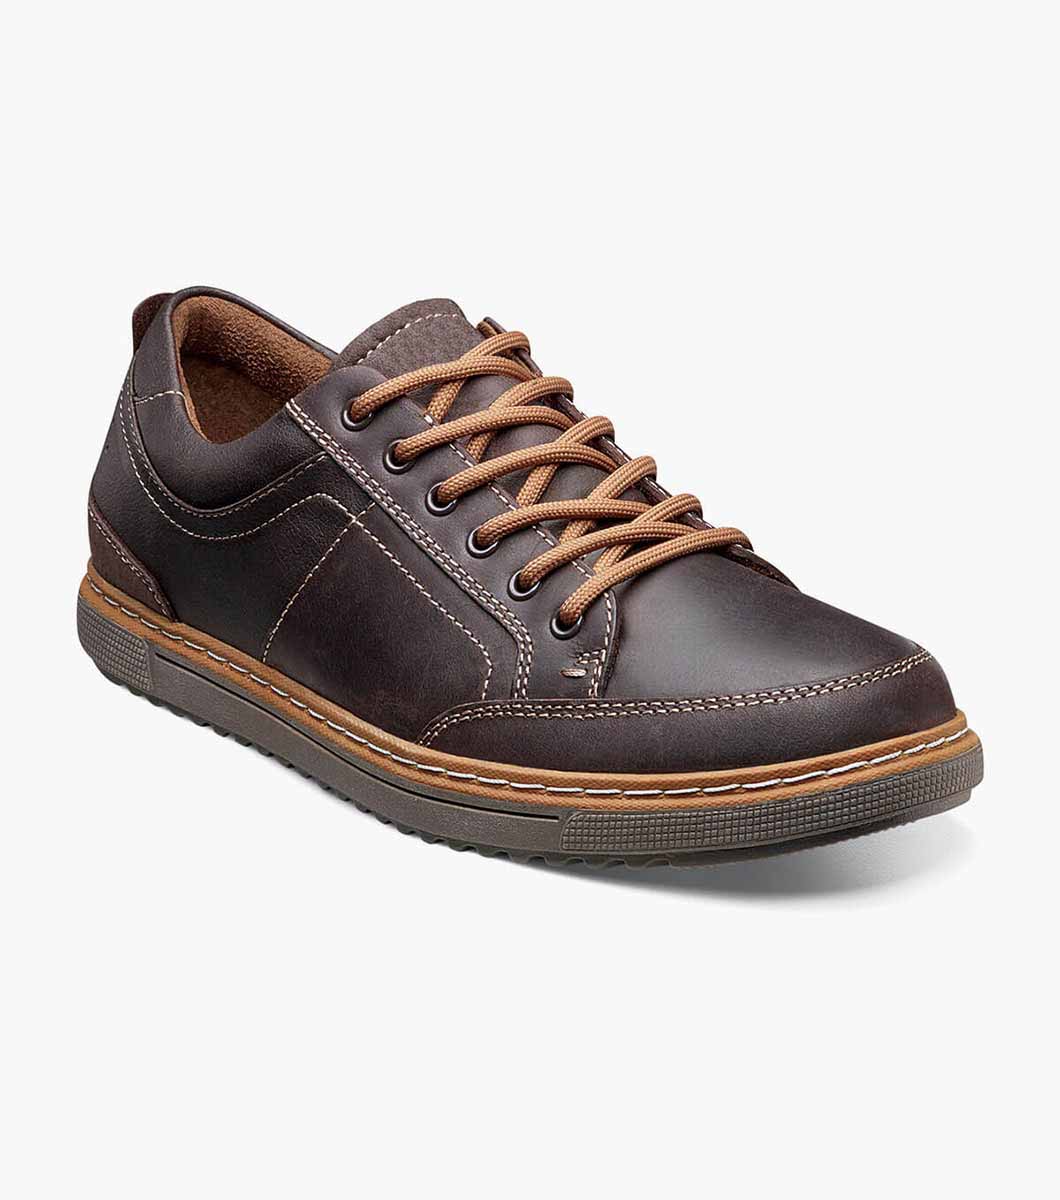 Work Shoes | Brown Moc Toe Oxford | Florsheim Gridley Steel Toe